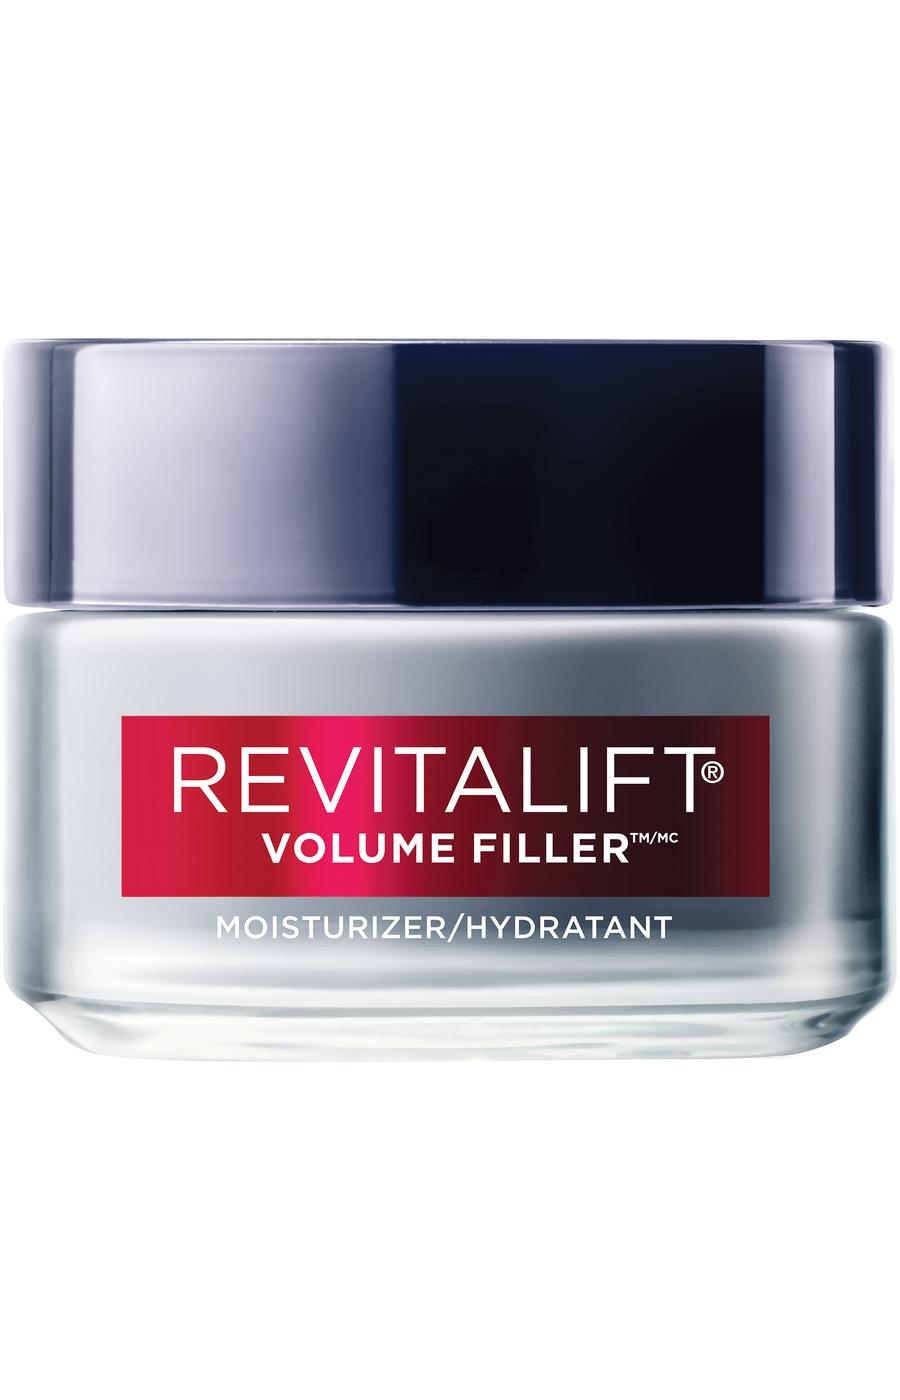 L'Oréal Paris Revitalift Volume Filler Daily Volumizing Moisturizer; image 2 of 2